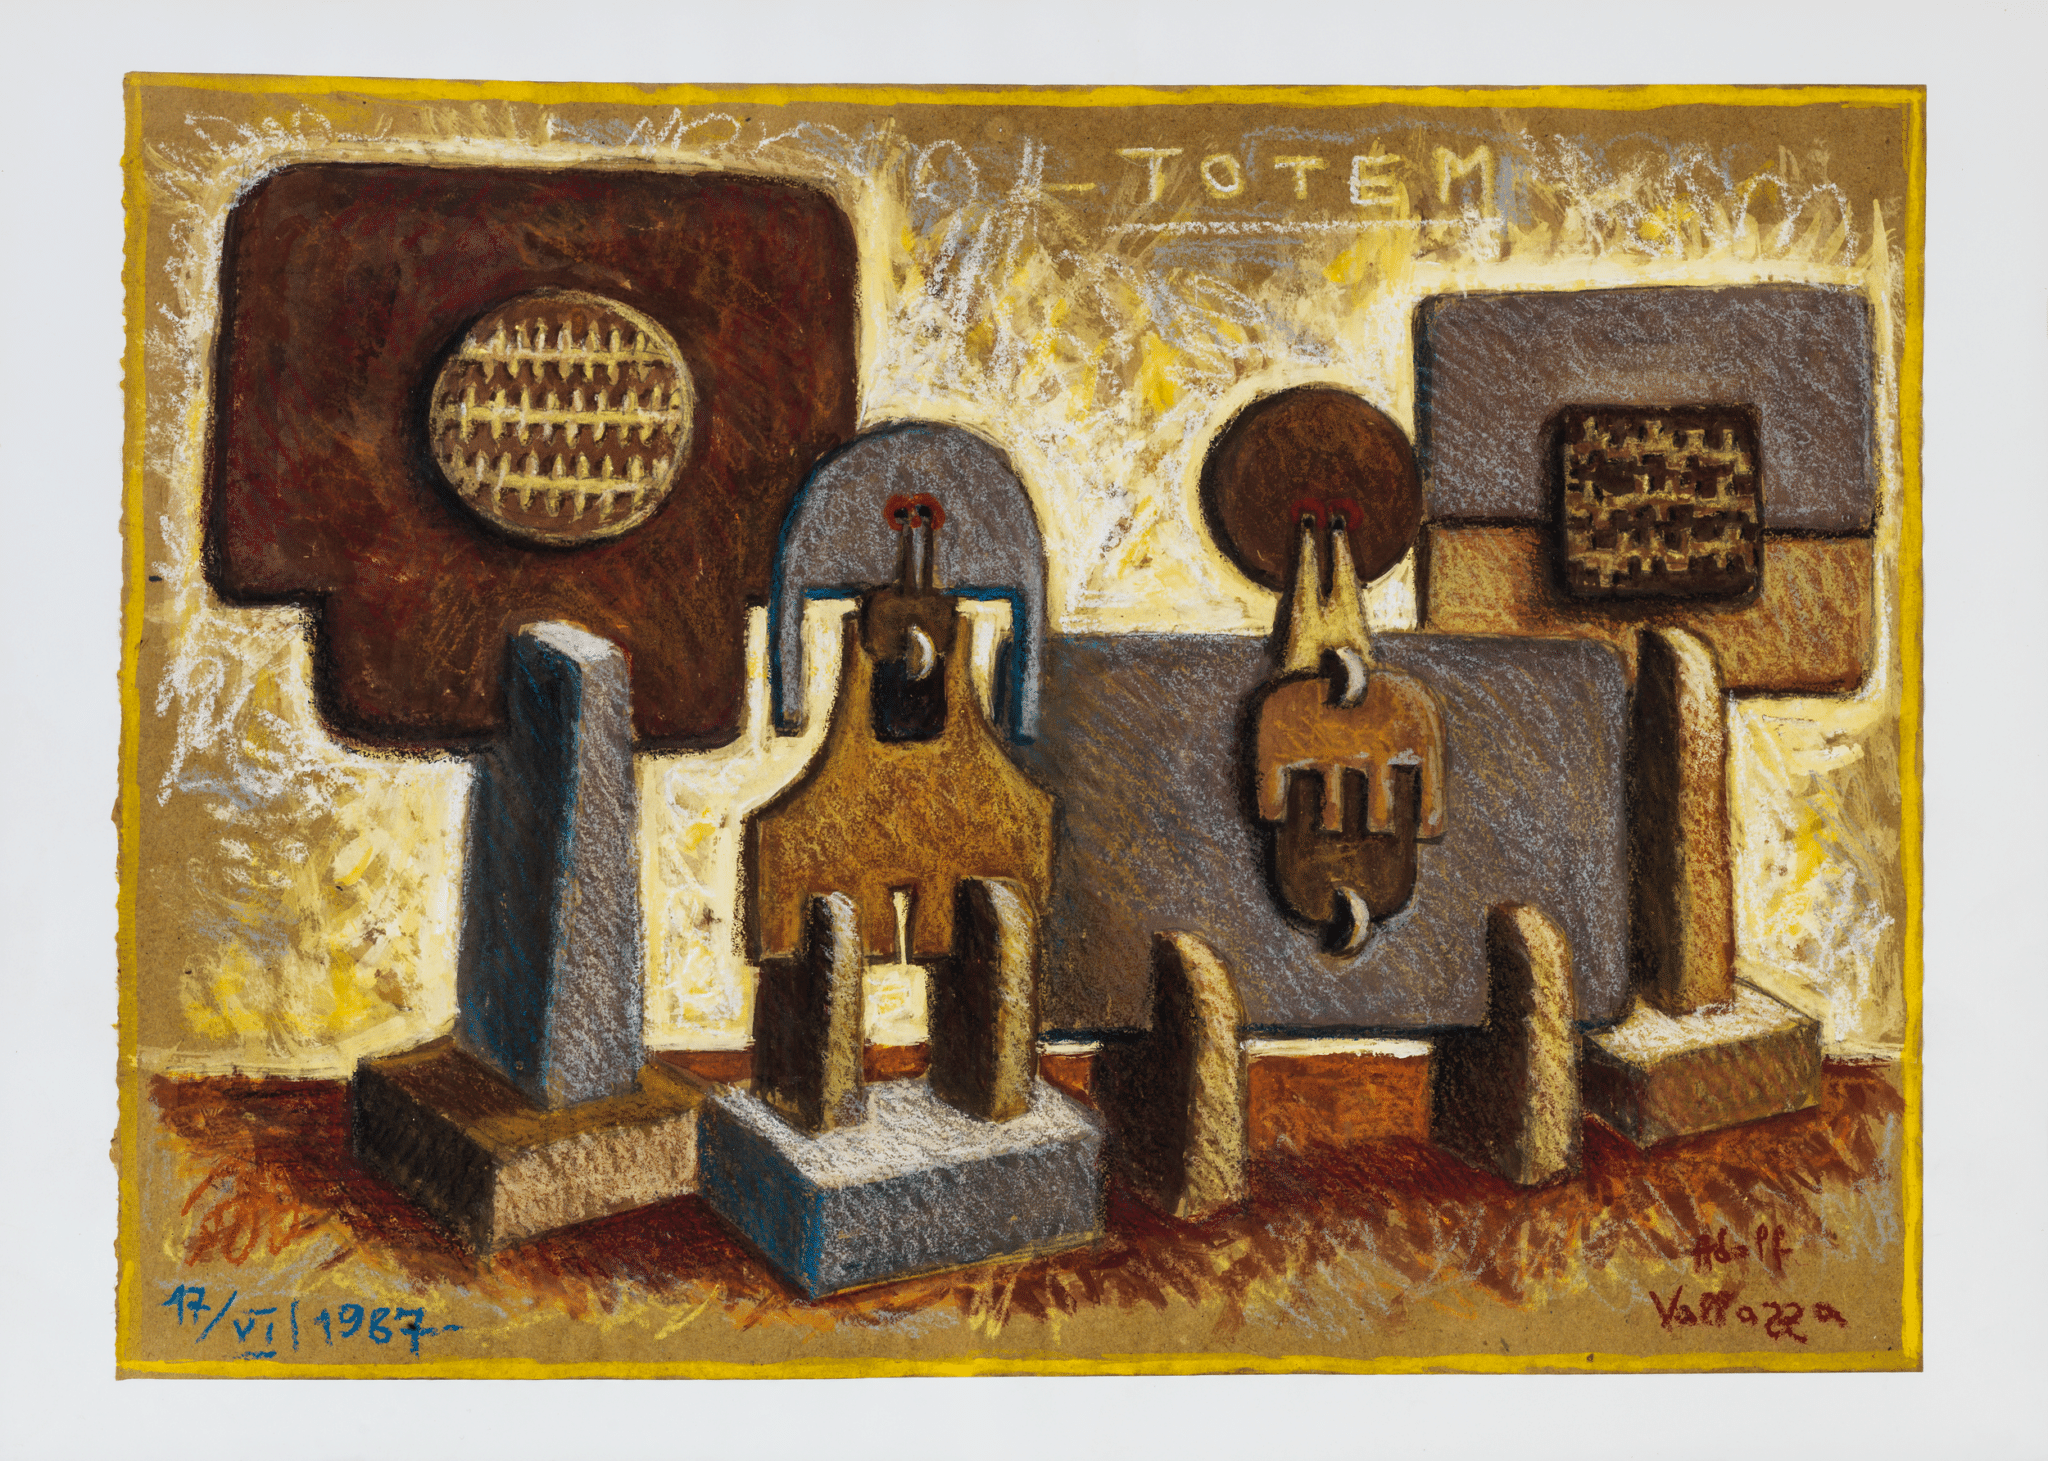 Adolf Vallazza, Totem, 1987, mixed media on paper, 44.2 x 61 cm Museion Collection, photo: Gardaphoto s.r.l., Salò